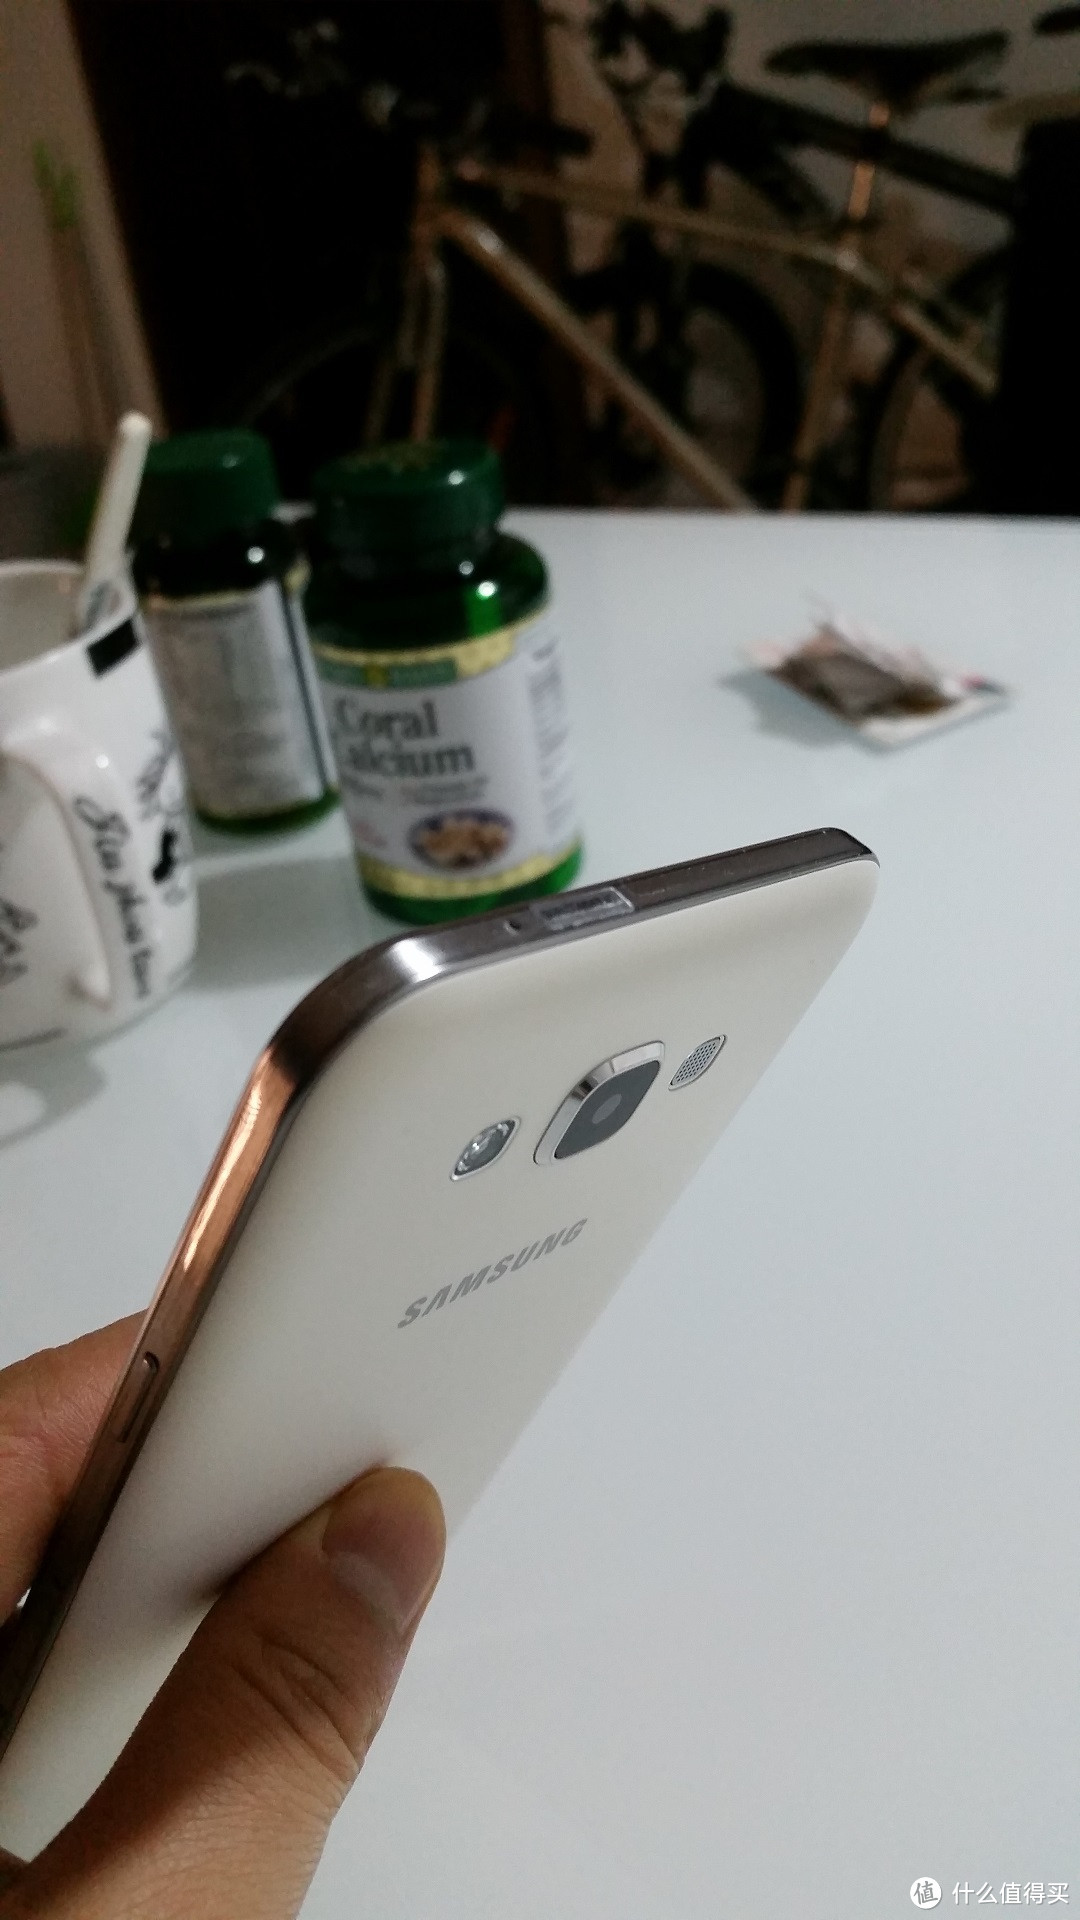 SAMSUNG 三星 Galaxy E7000 白色 4G手机